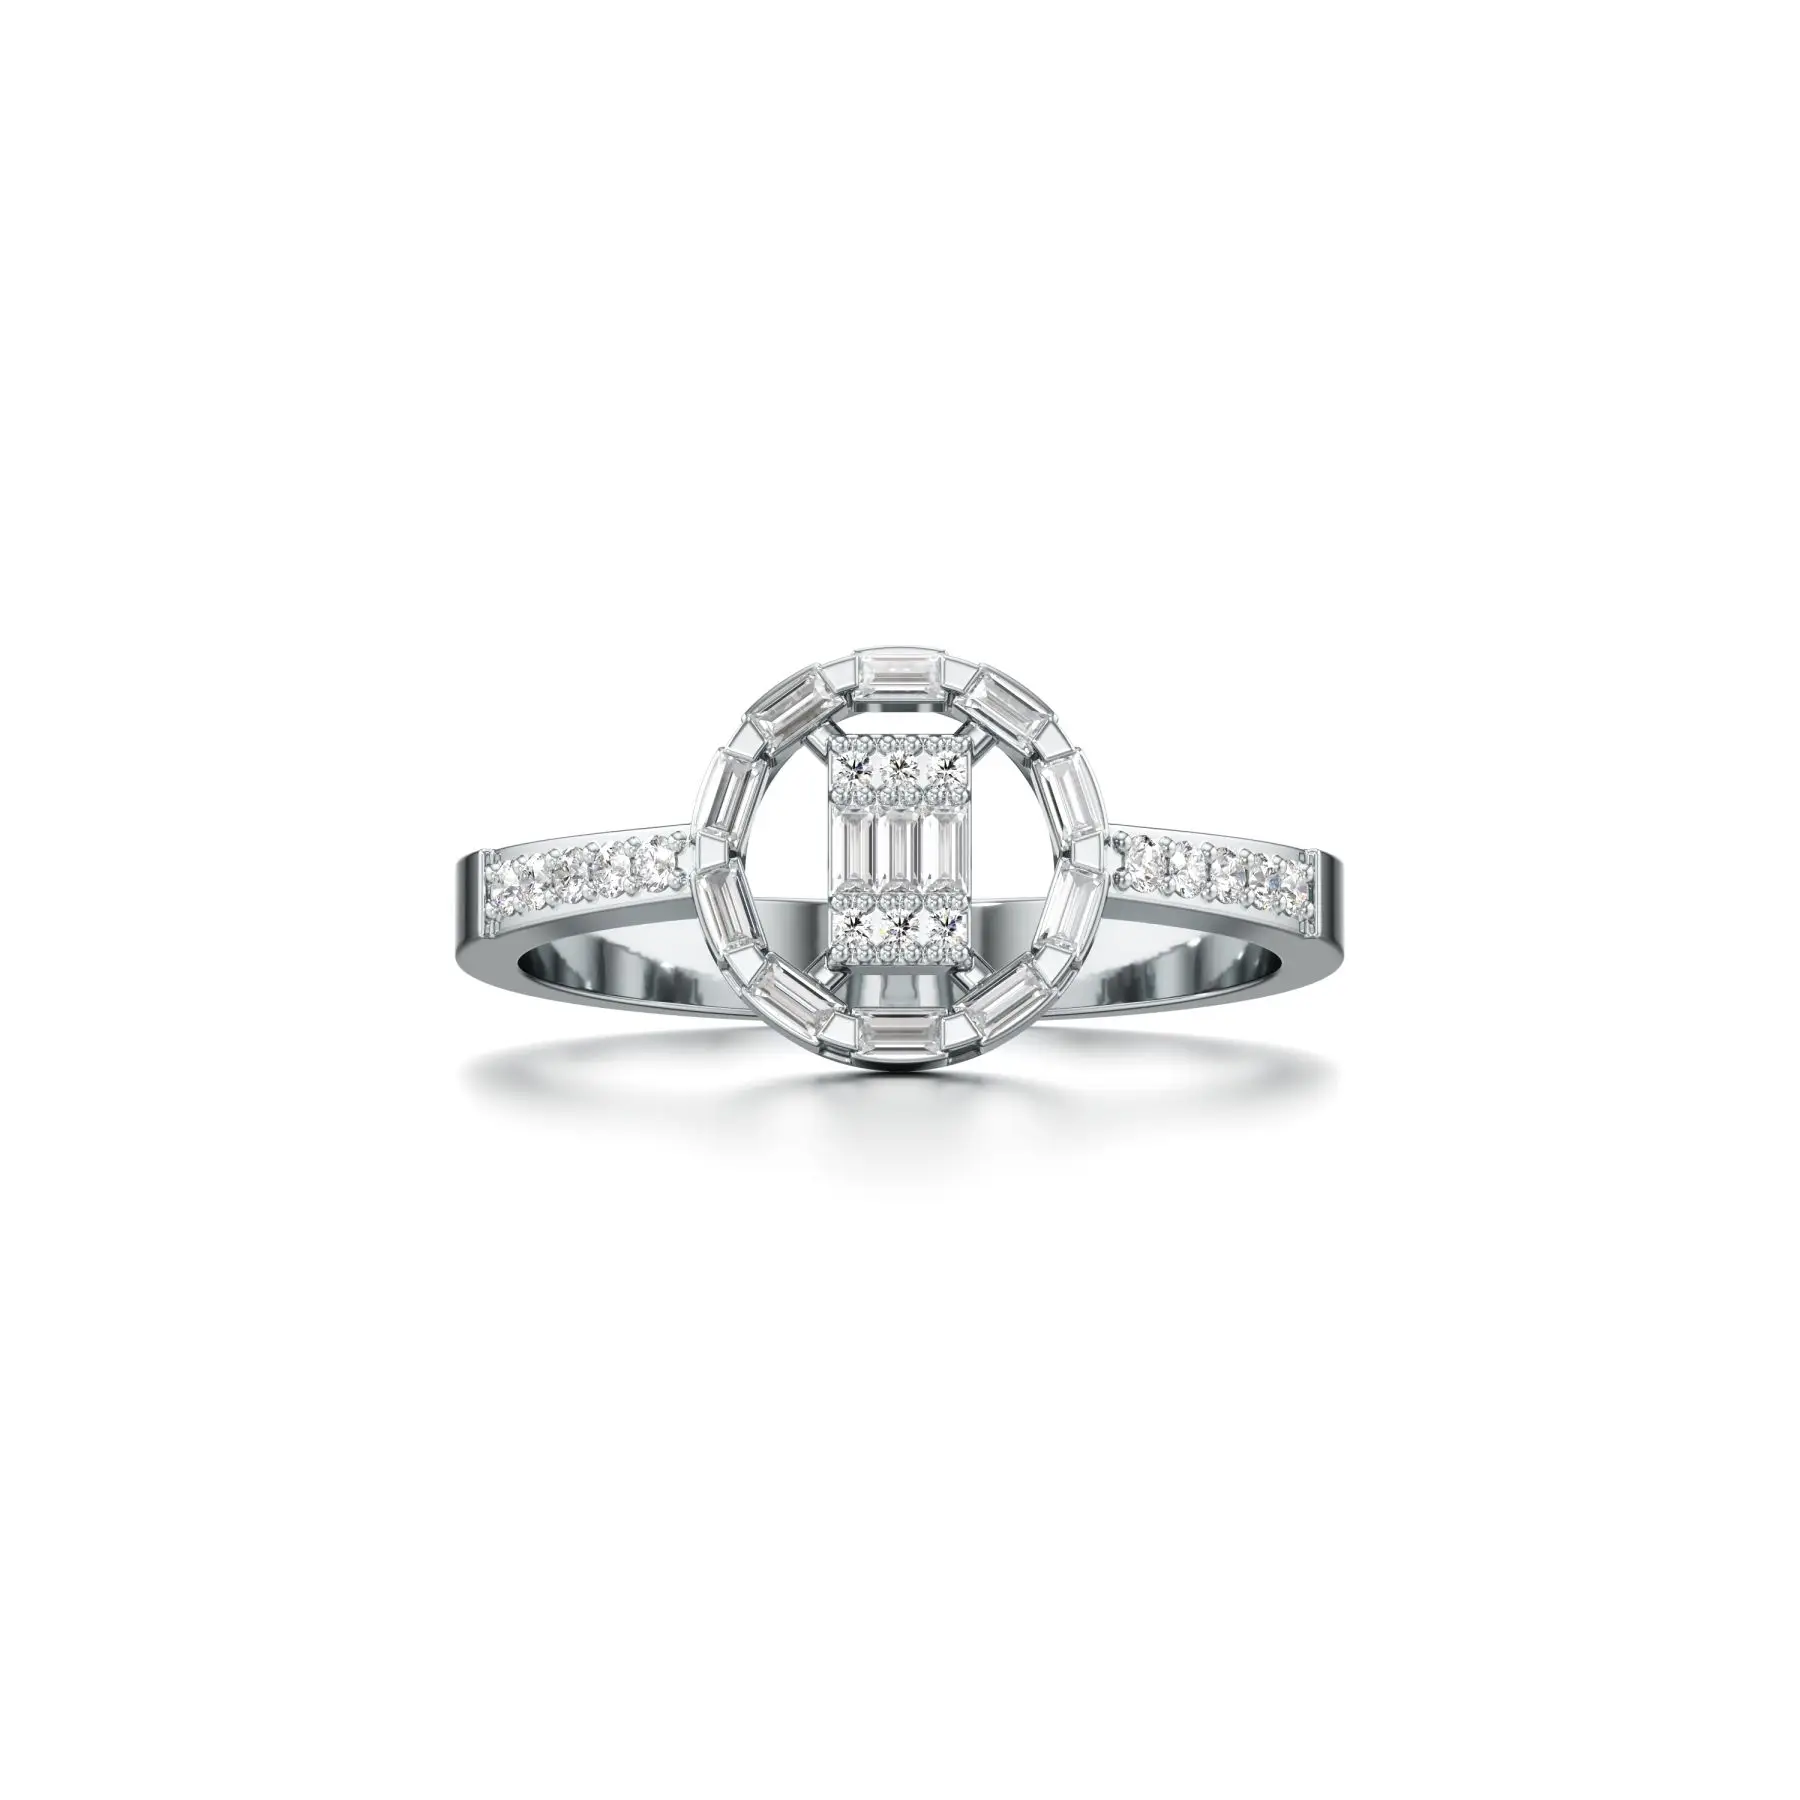 Snazzy Love Diamond Ring in White 10k Gold